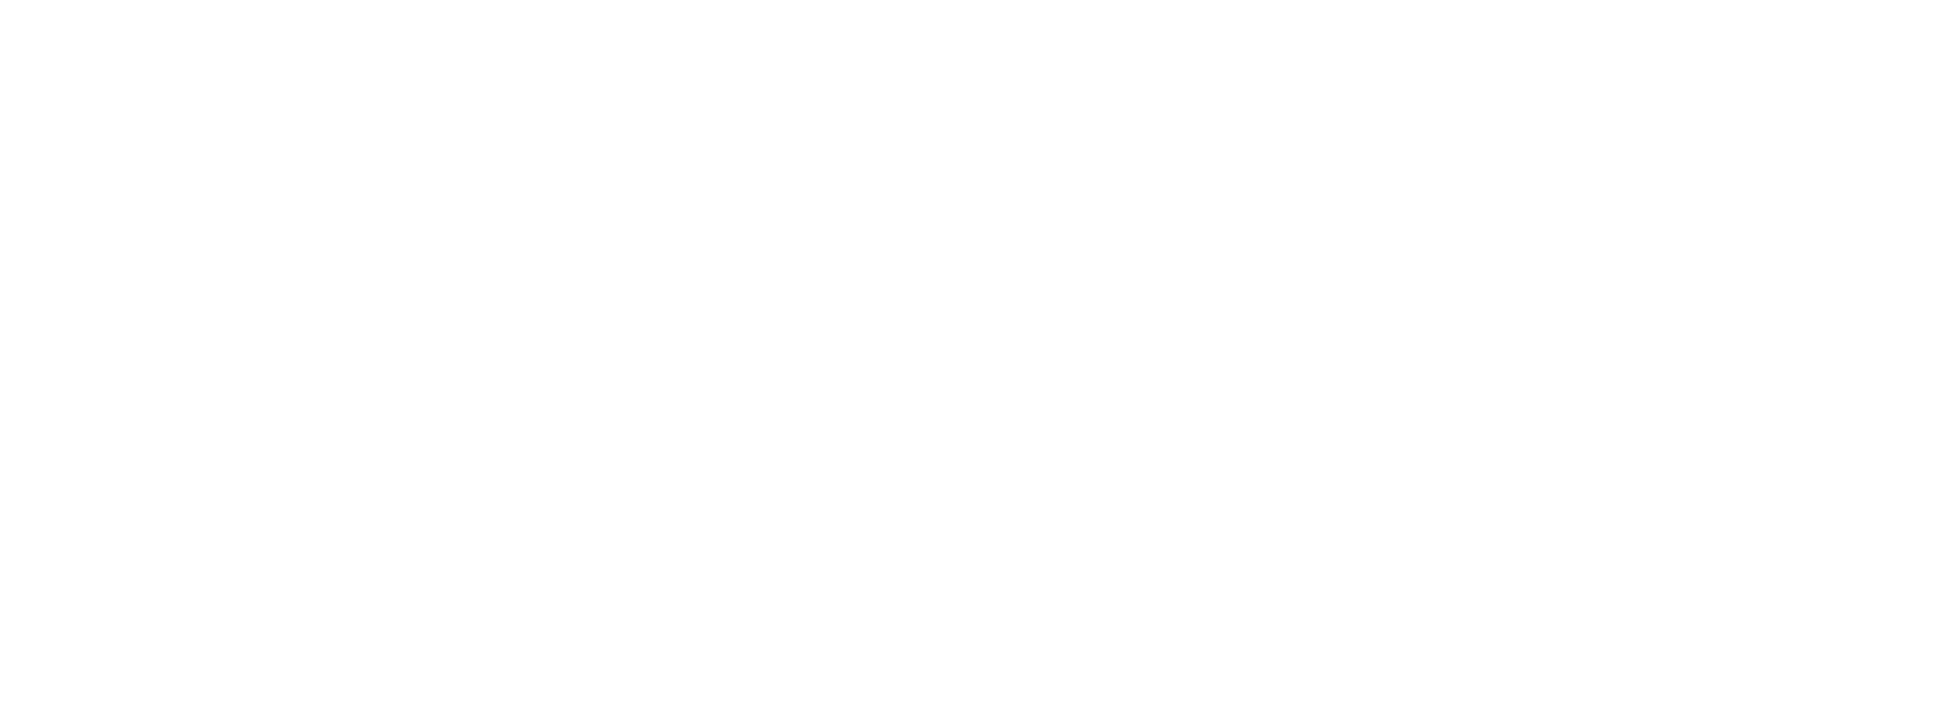 X Golf Logo El Dorado Hills White